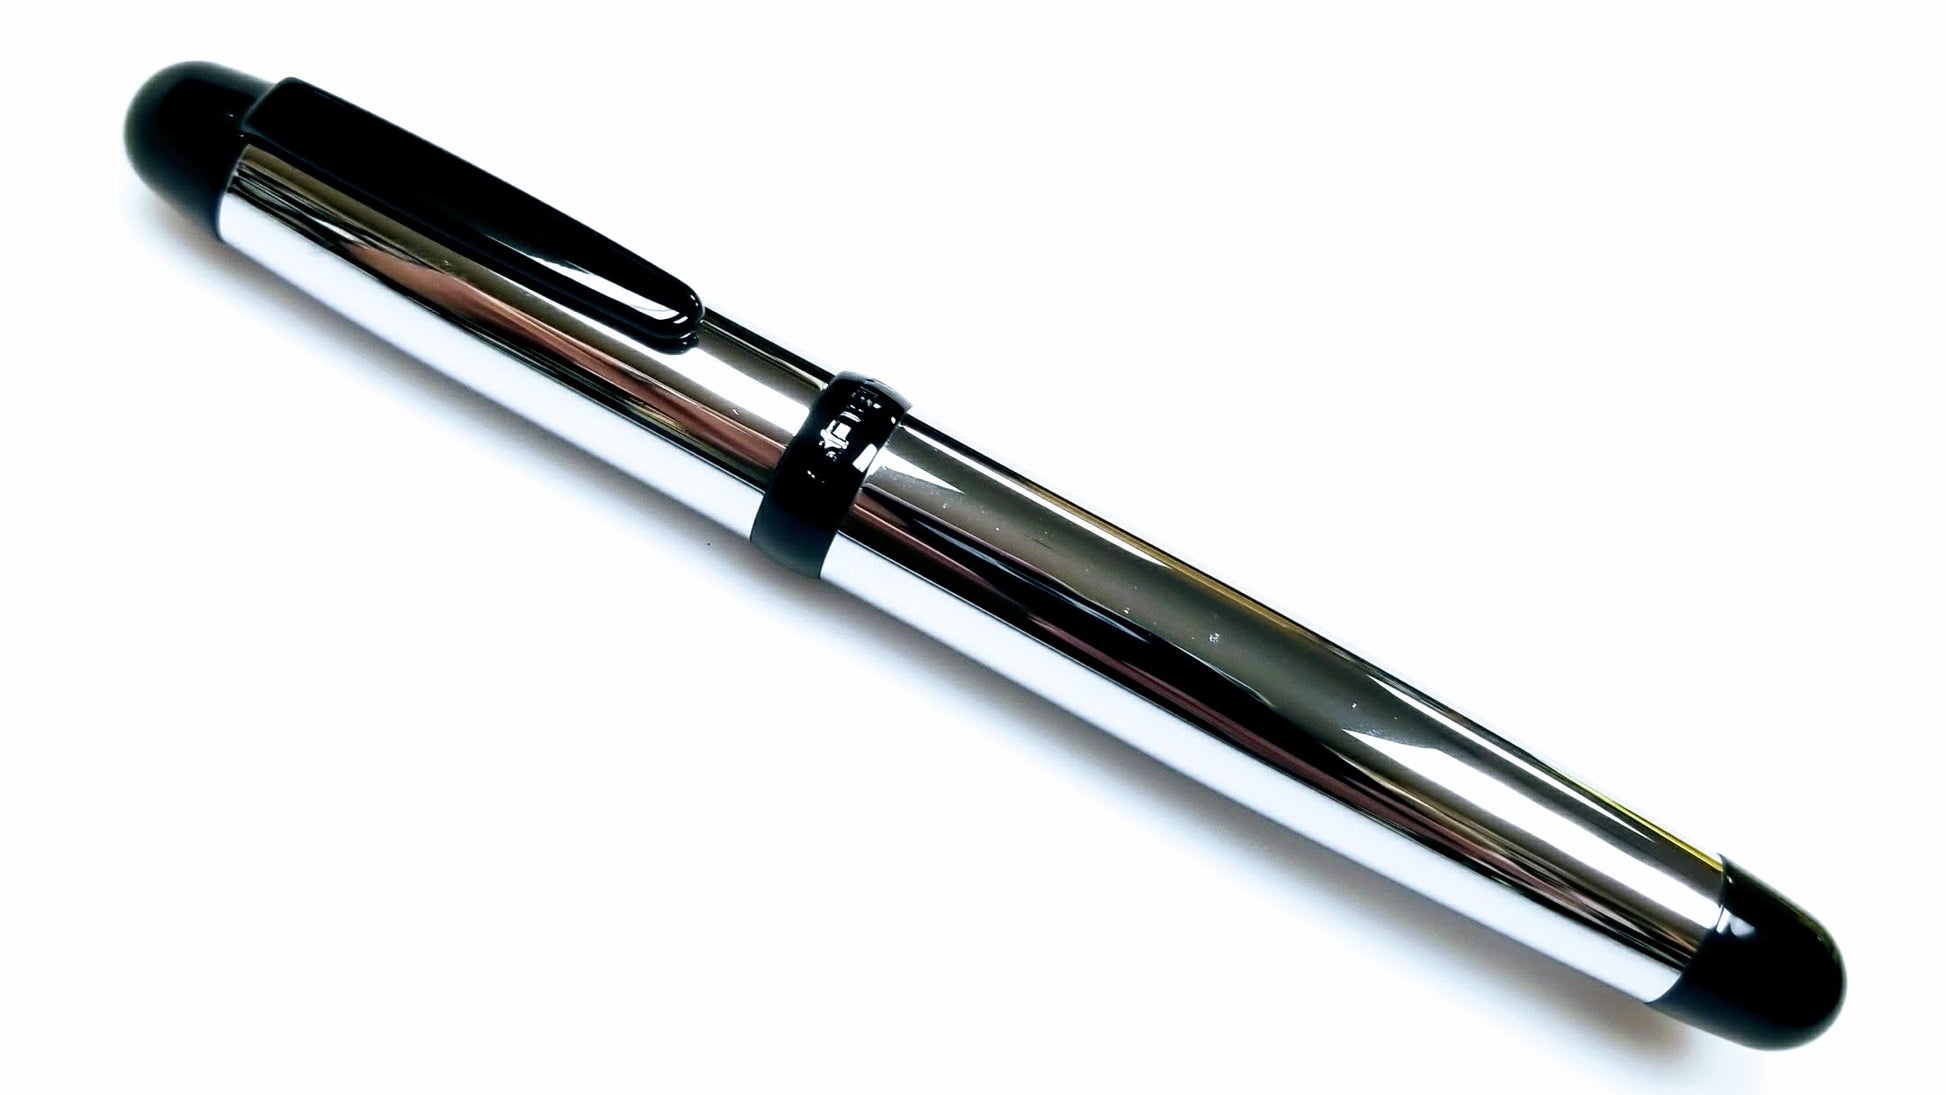 Sherpa Pen Classic Silver Bullet Chrome Pen/Sharpie Marker Cover